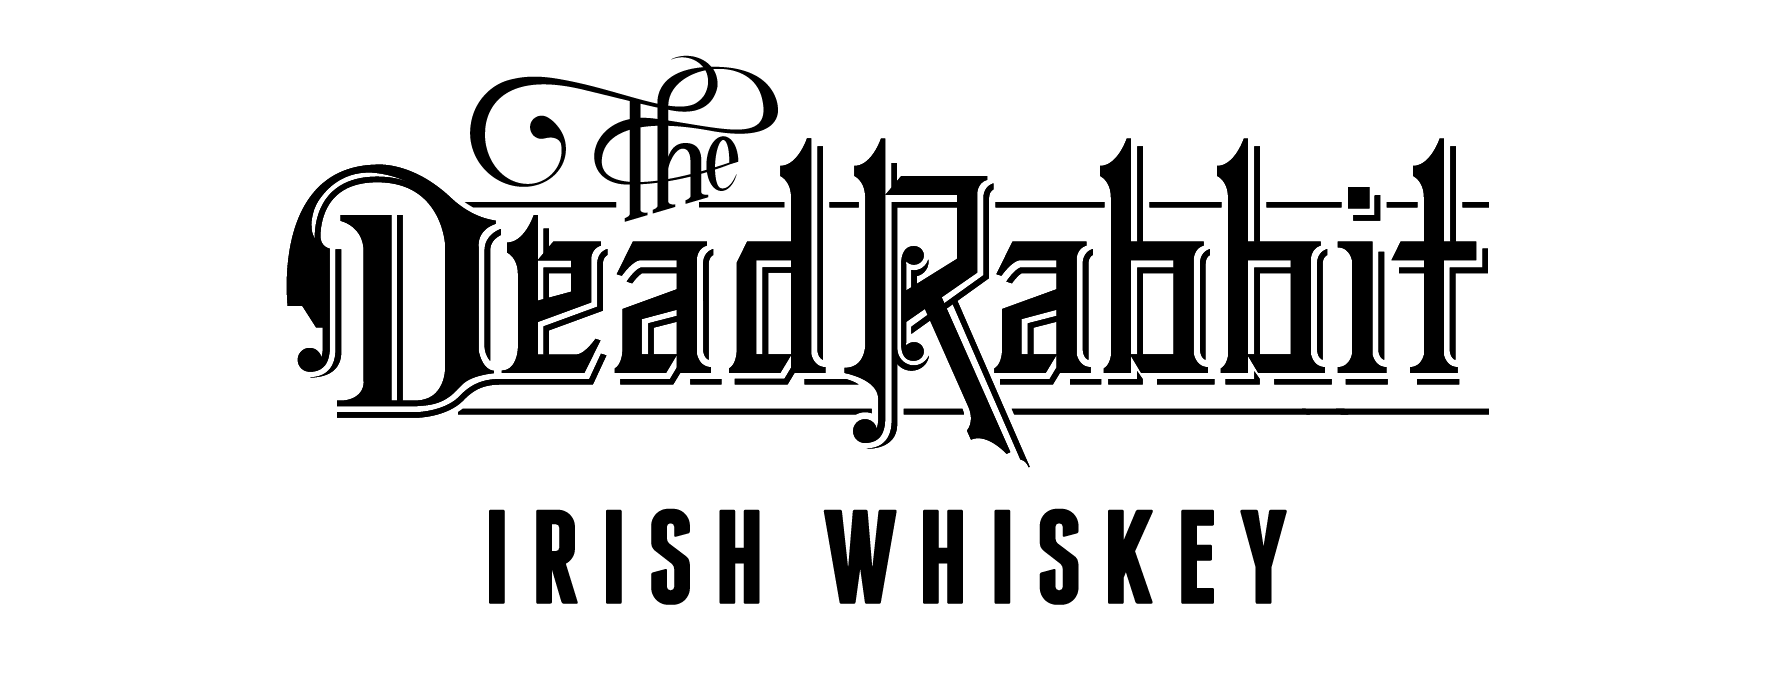 Irish Whiskey Logo - The Story - The Dead Rabbit Irish Whiskey